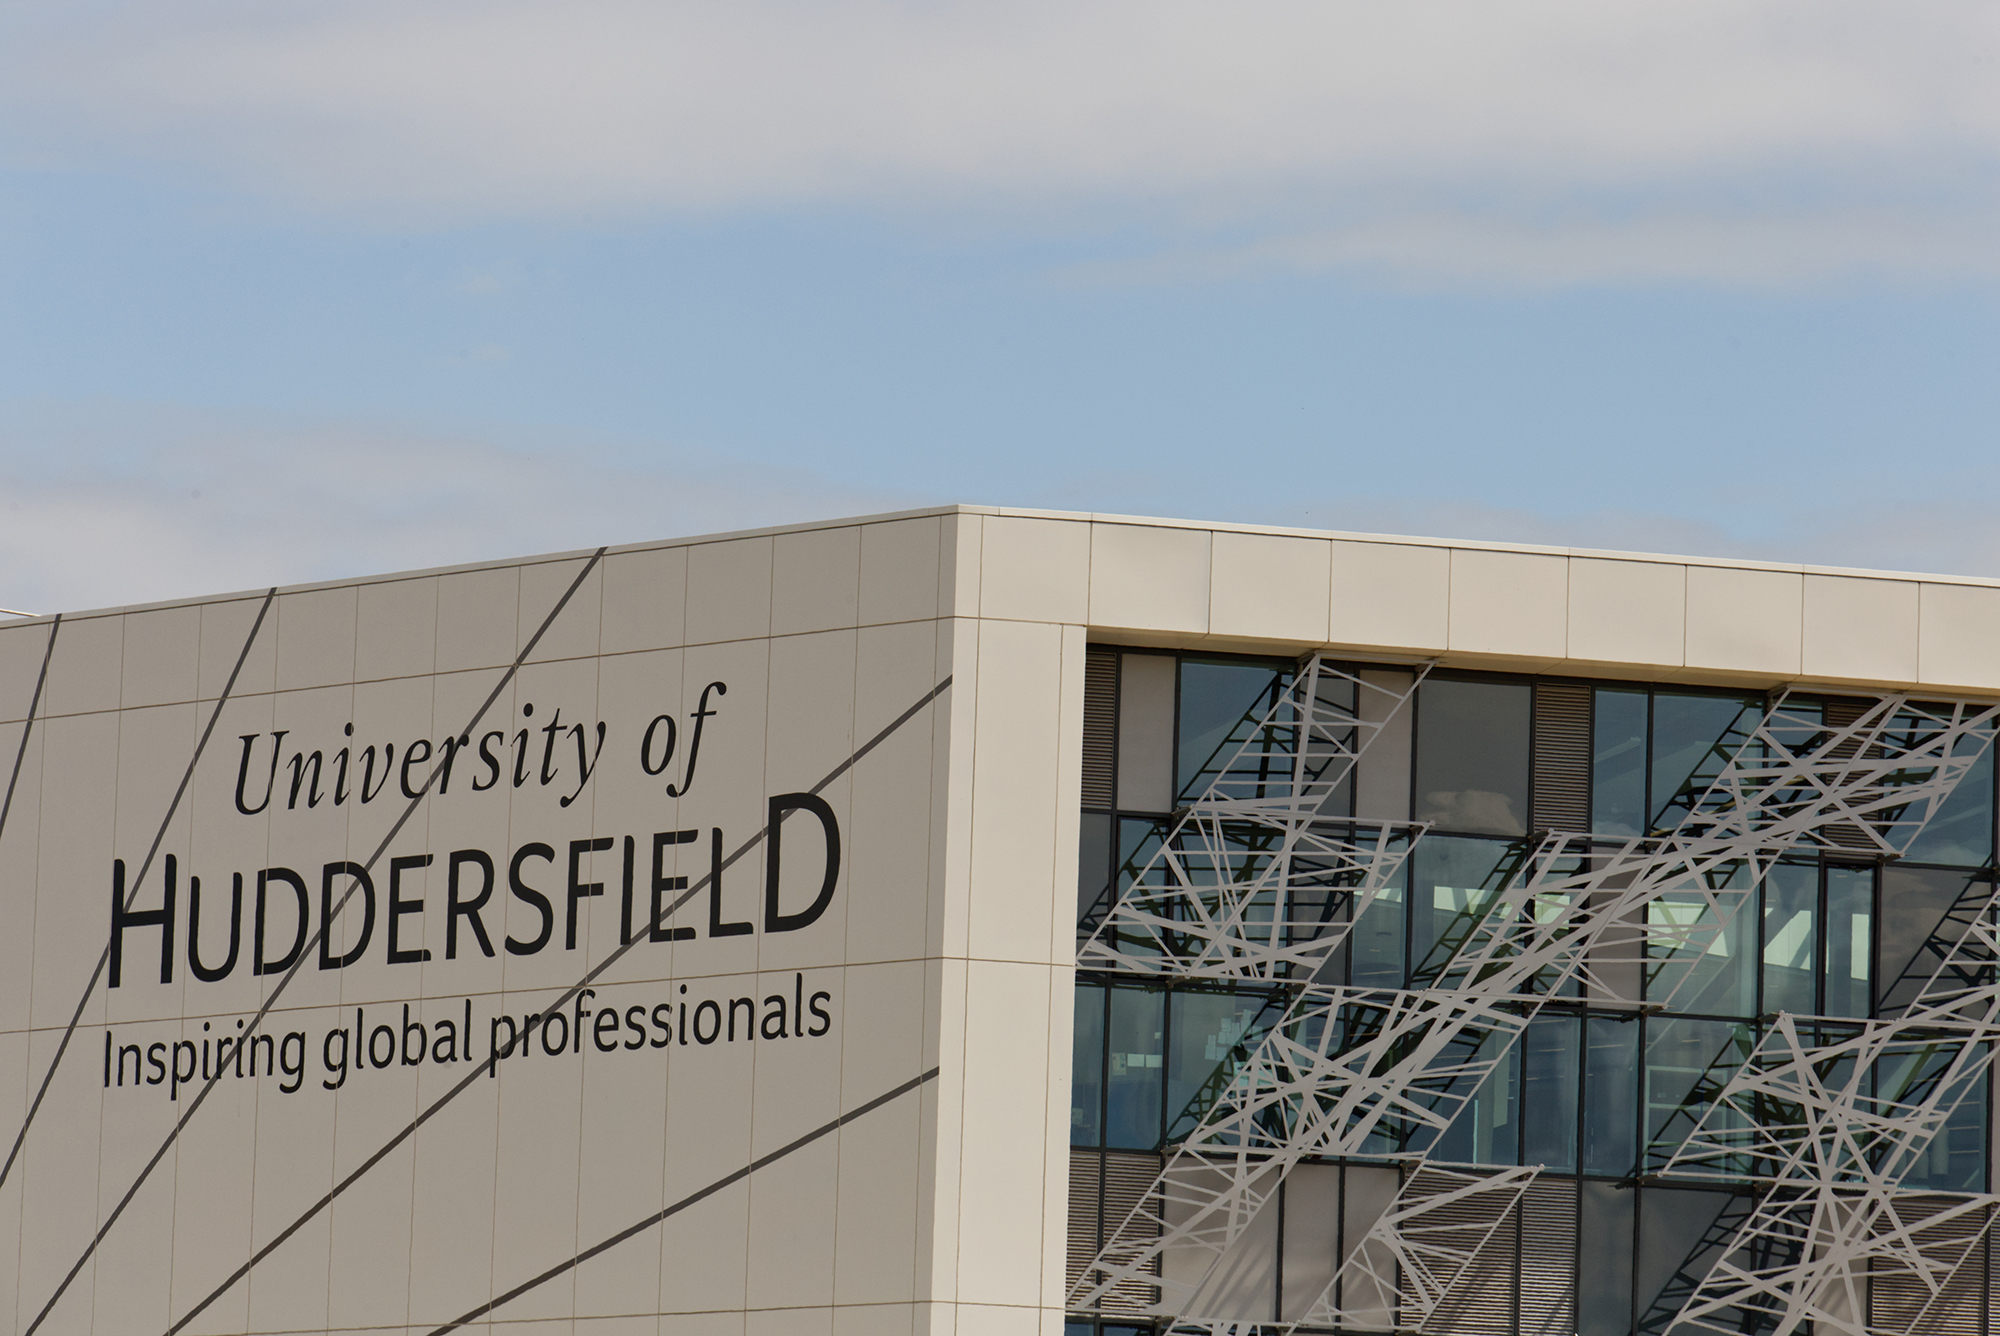 University of Huddersfield Art and Design building